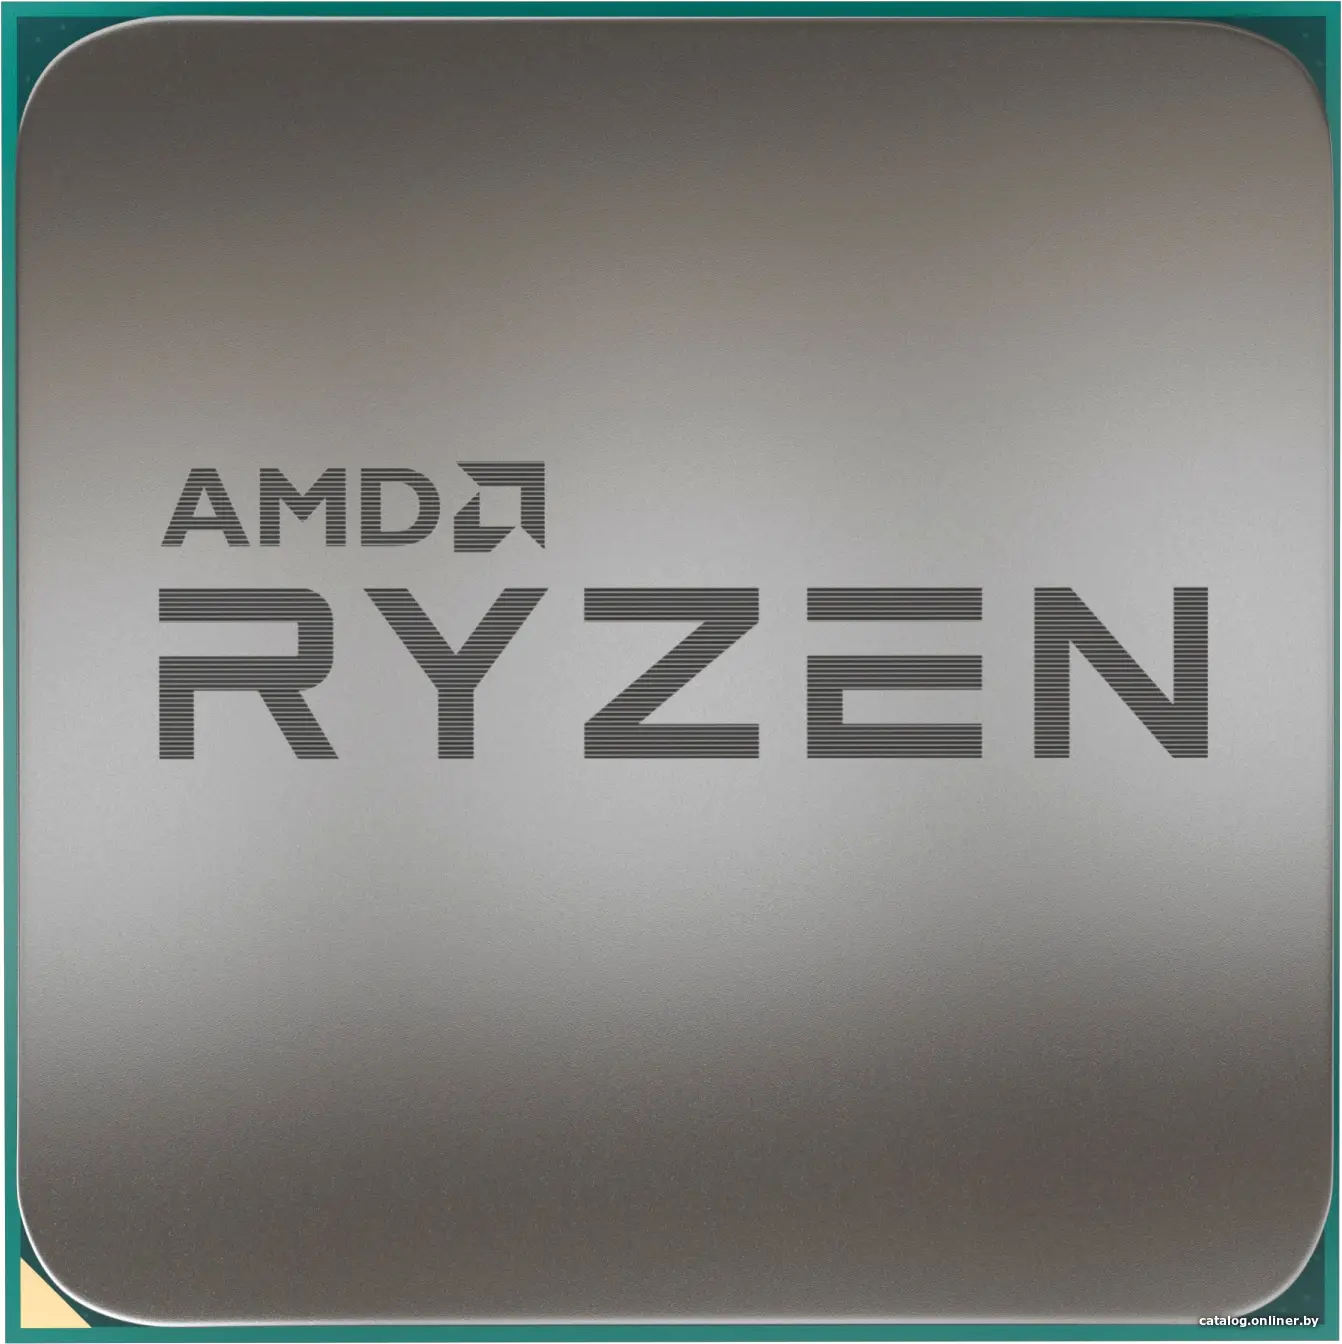 Купить AMD CPU Desktop Ryzen 3 4C/4T 3200G (4.0GHz,6MB,65W,AM4) tray, цена, опт и розница